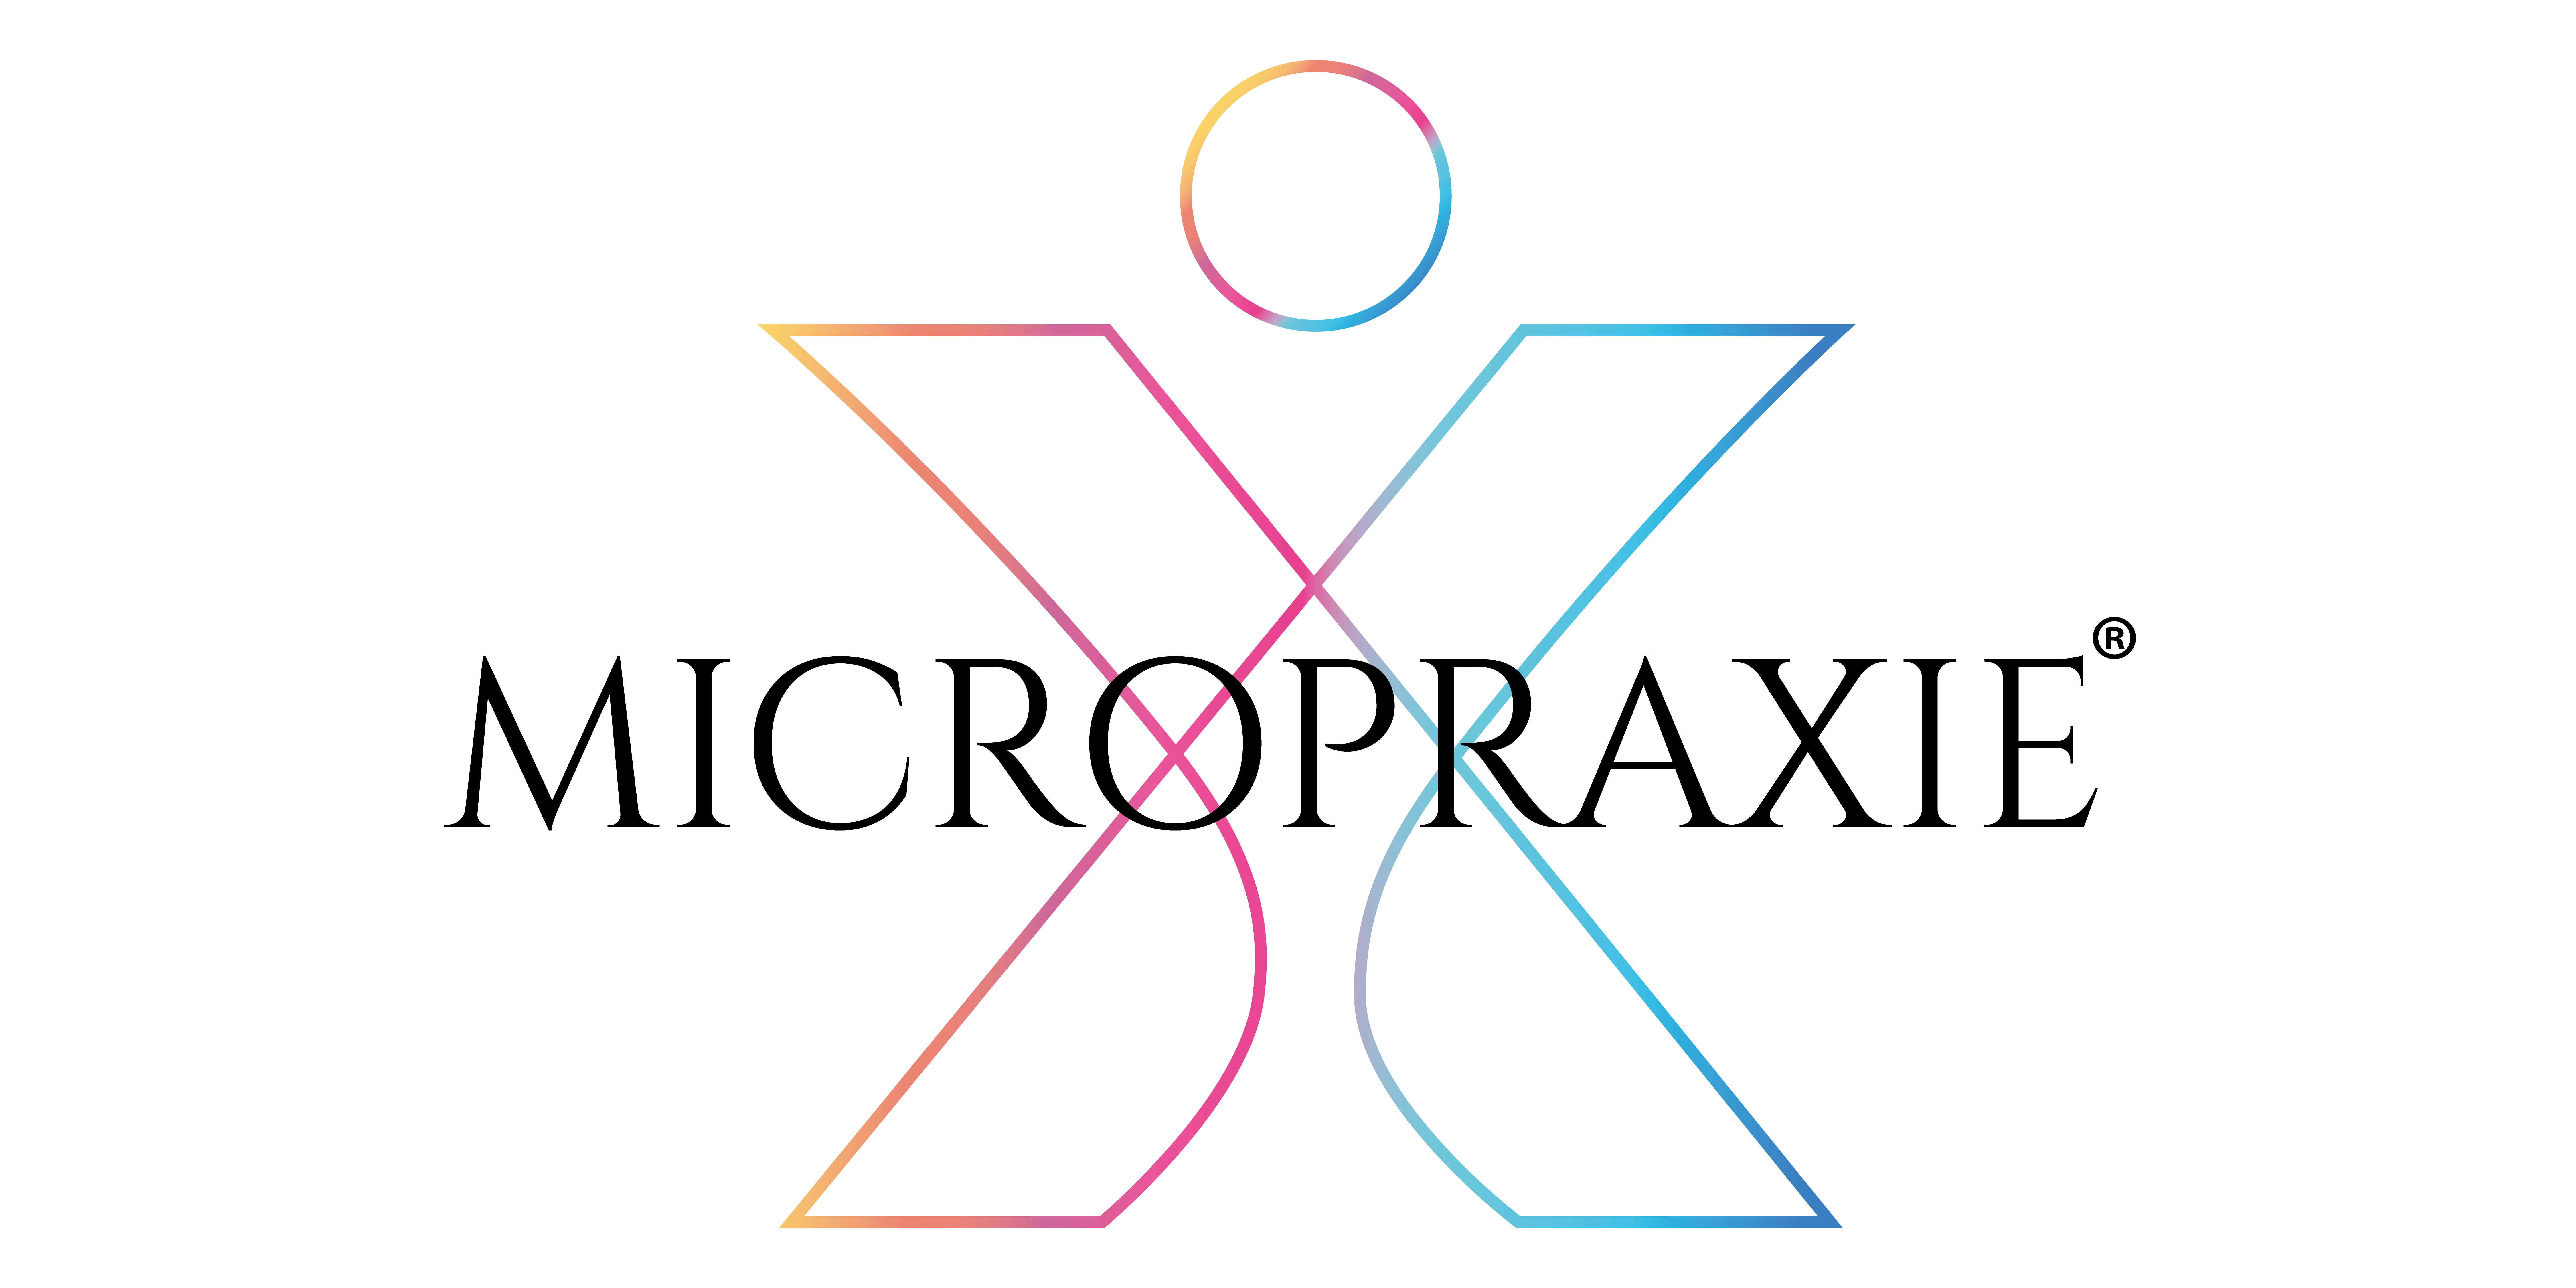 Micropraxie